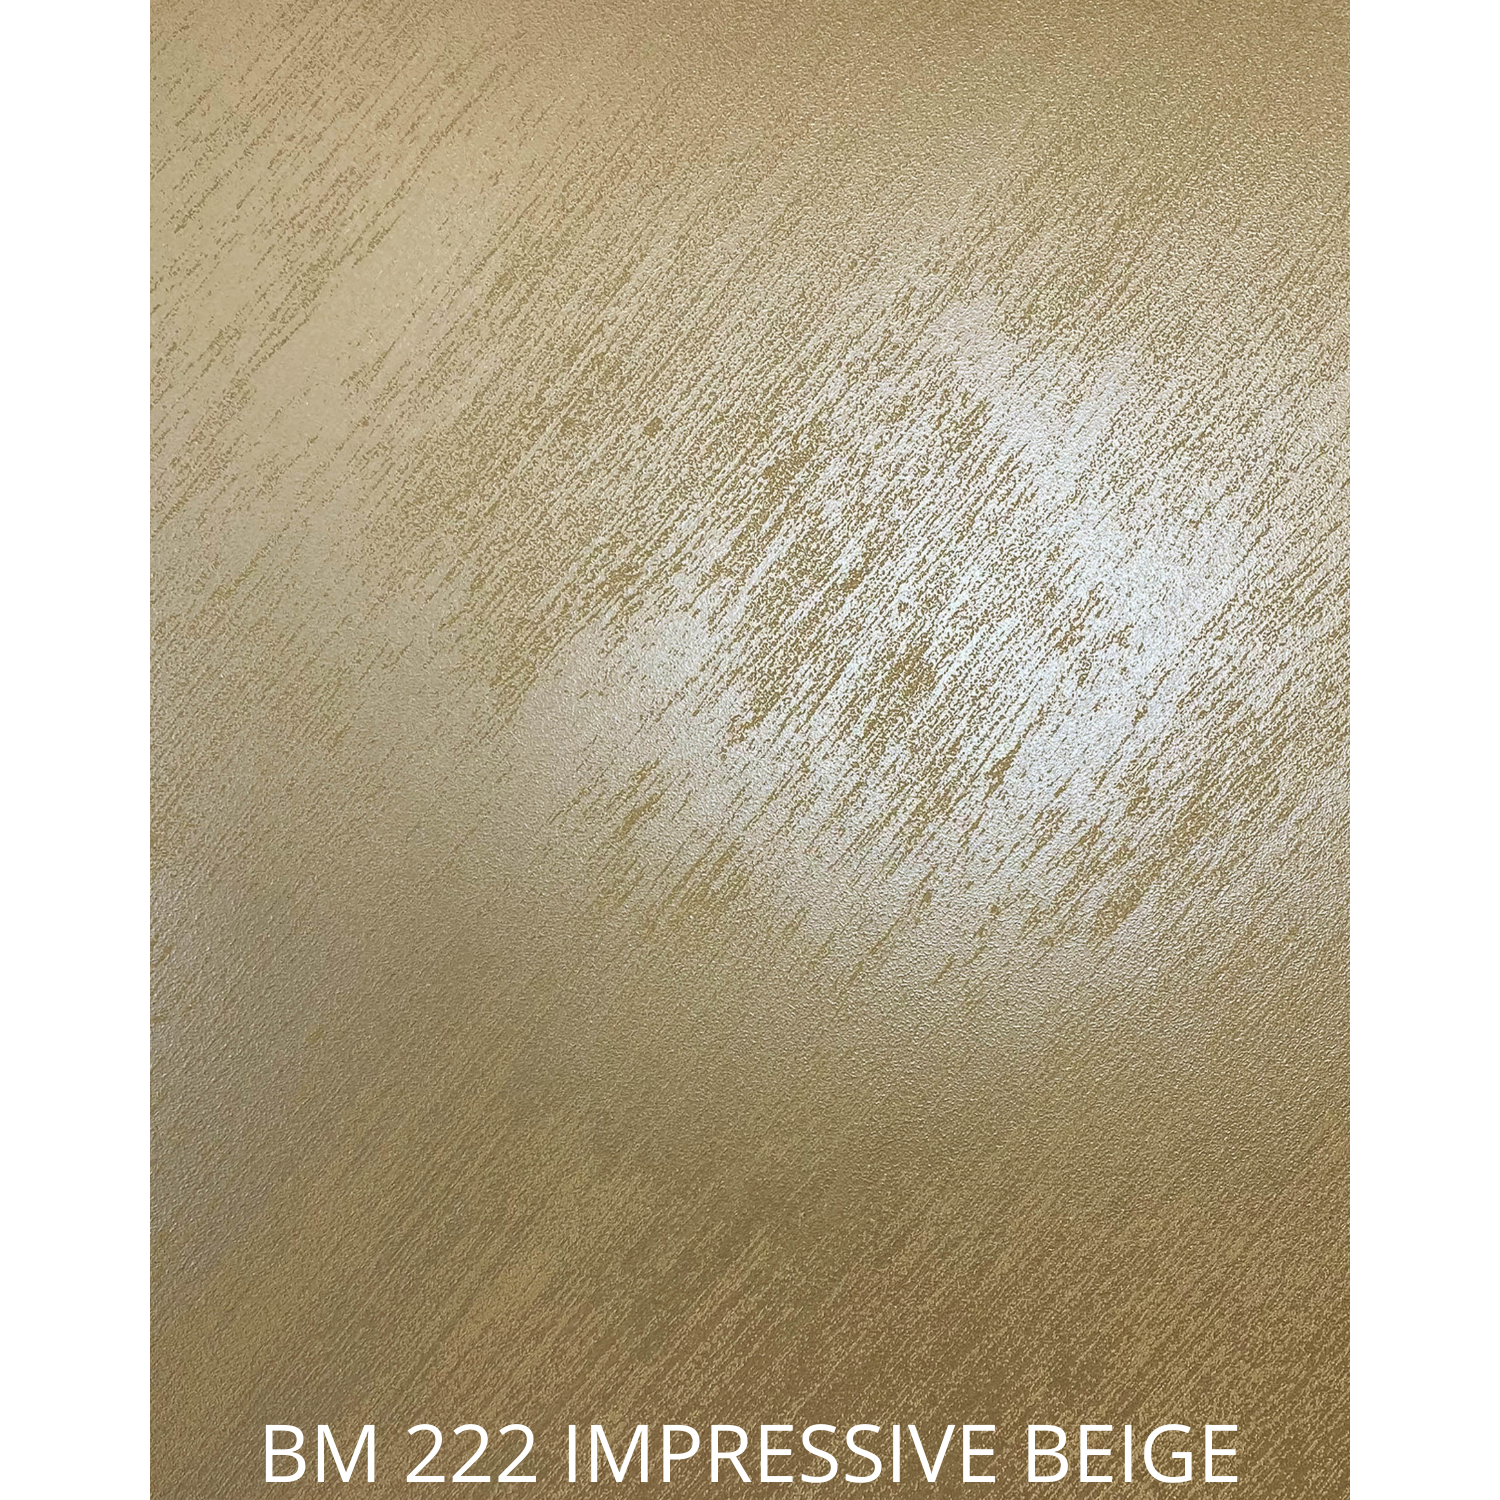 BM 222 IMPRESSIVE BEIGE